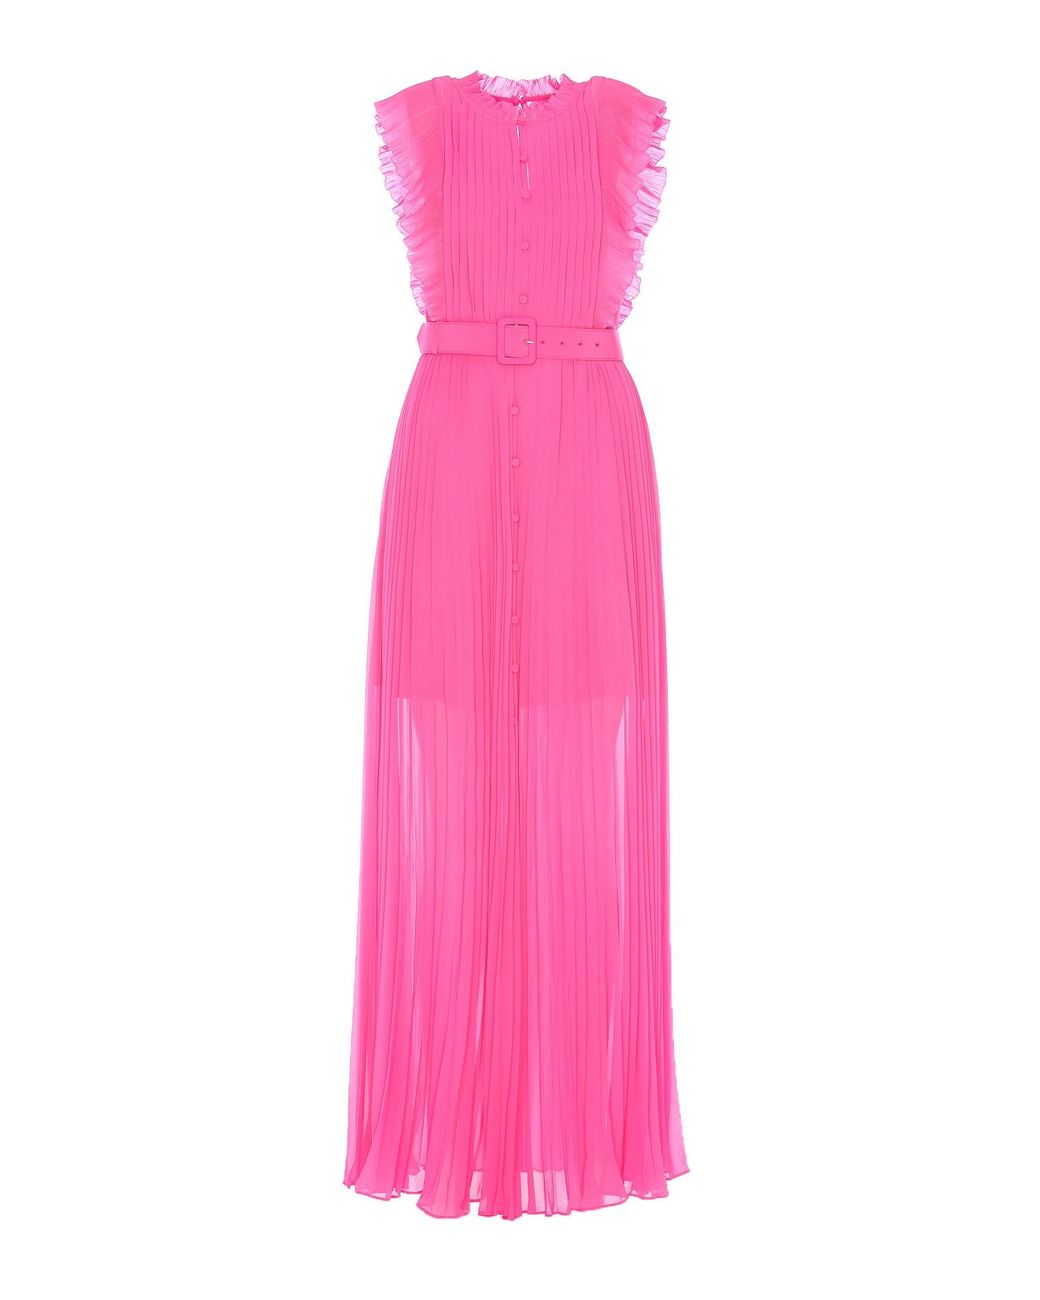 Self-Portrait Chiffon Ruffle Maxi Dress in Pink | Lyst